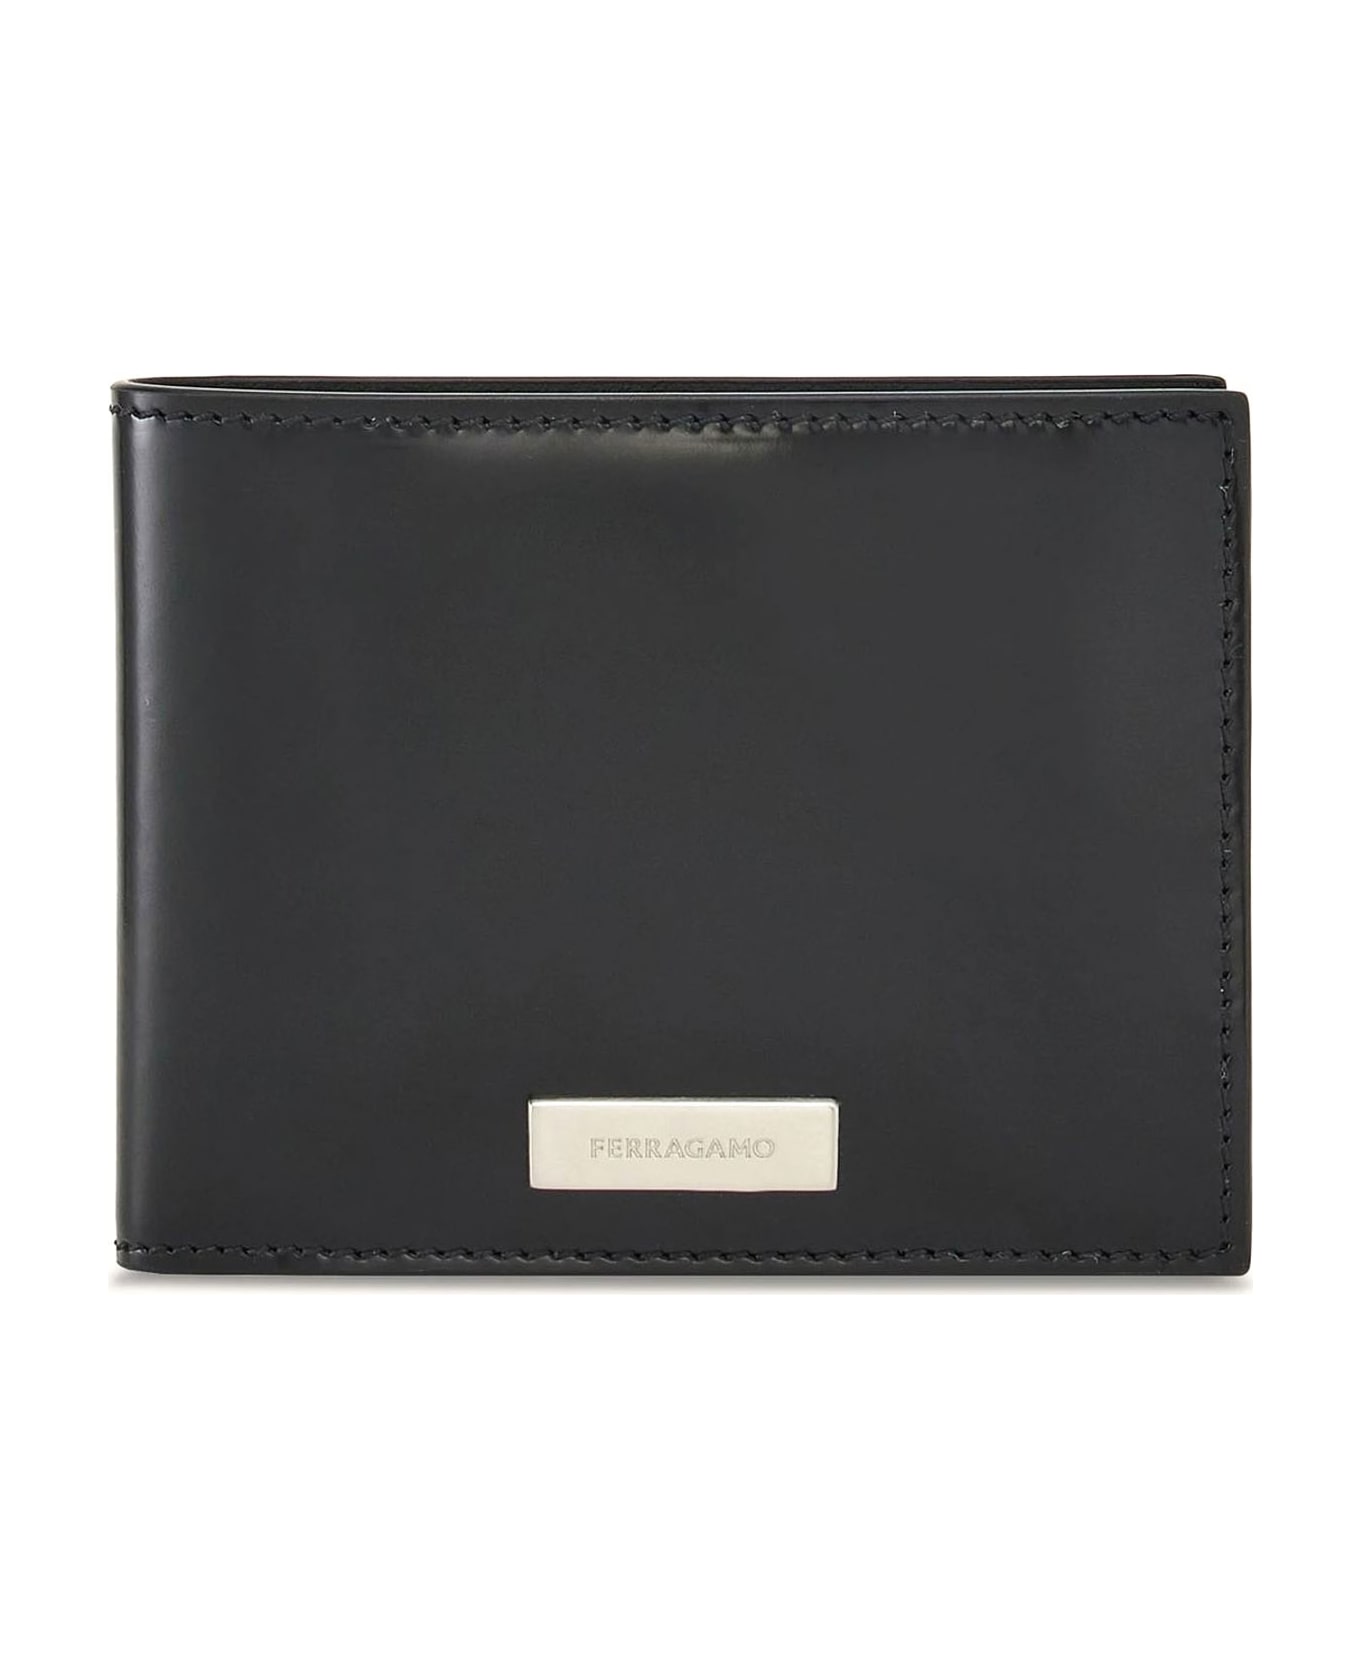 Ferragamo Black Calfskin Leather Wallet - Black